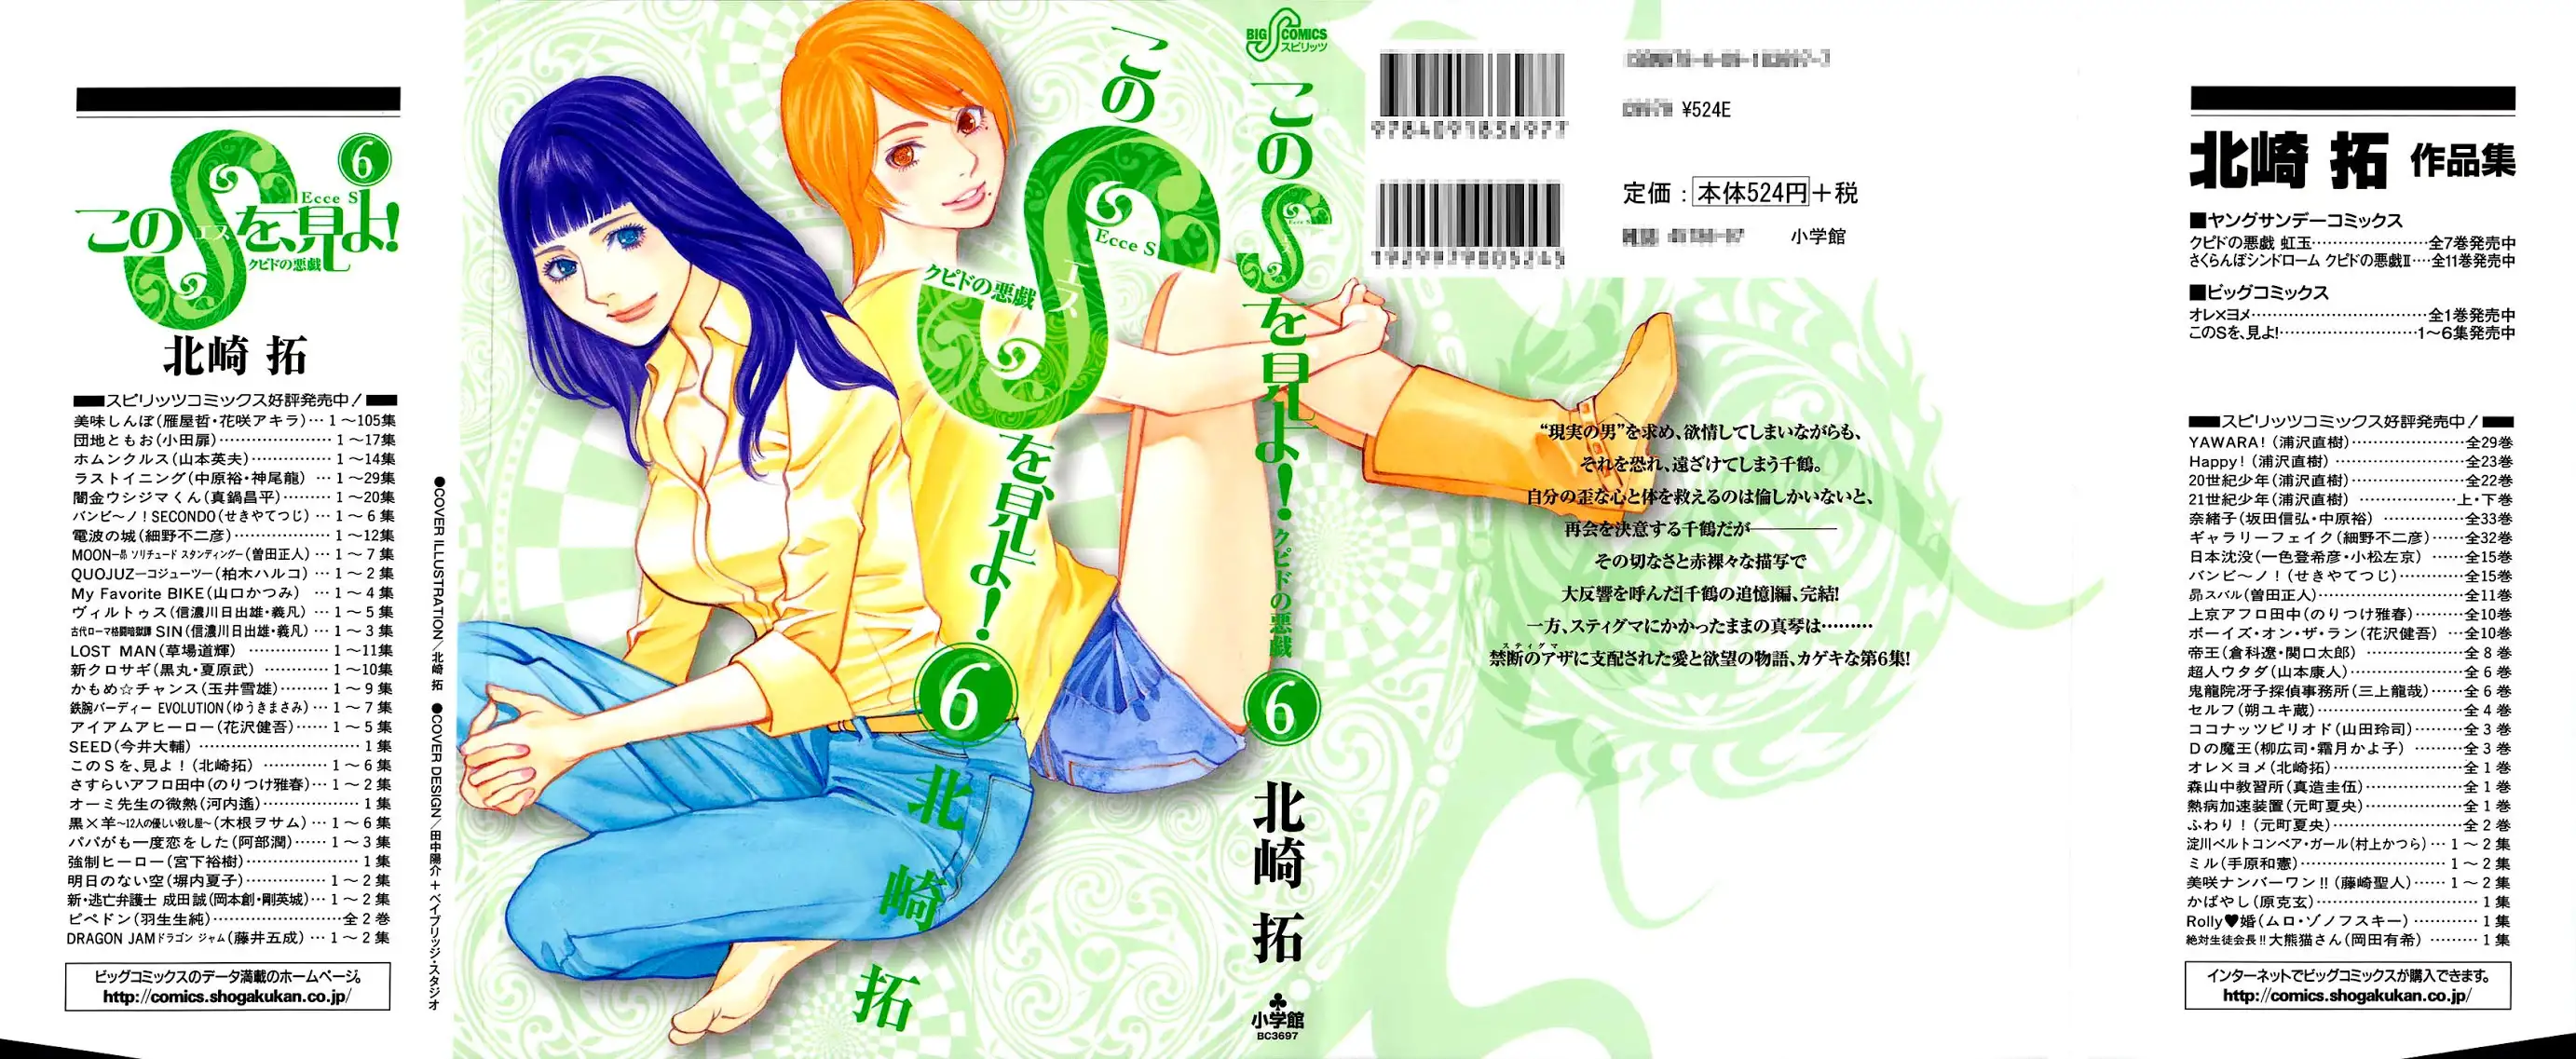 Kono S o, Mi yo! – Cupid no Itazura - Chapter 52 Page 1